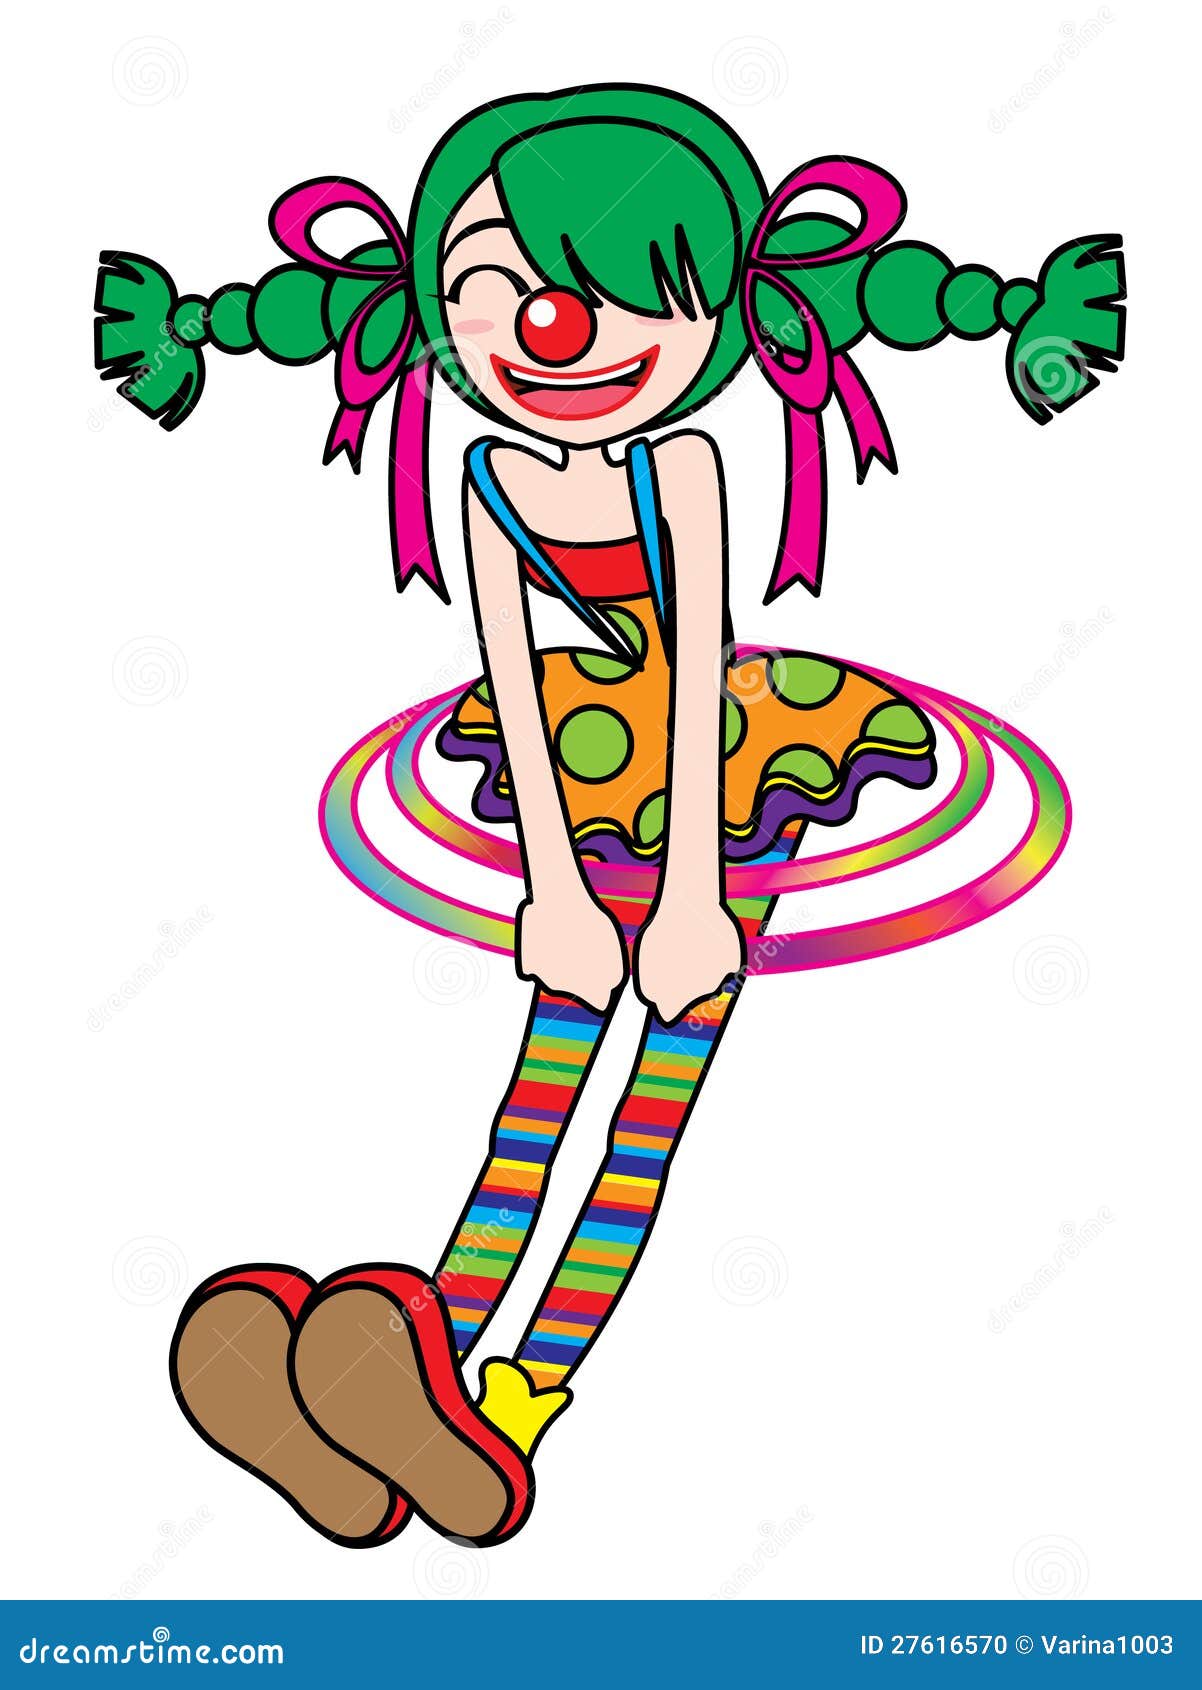 Joker girl stock vector. Illustration of color, colorful - 27616570